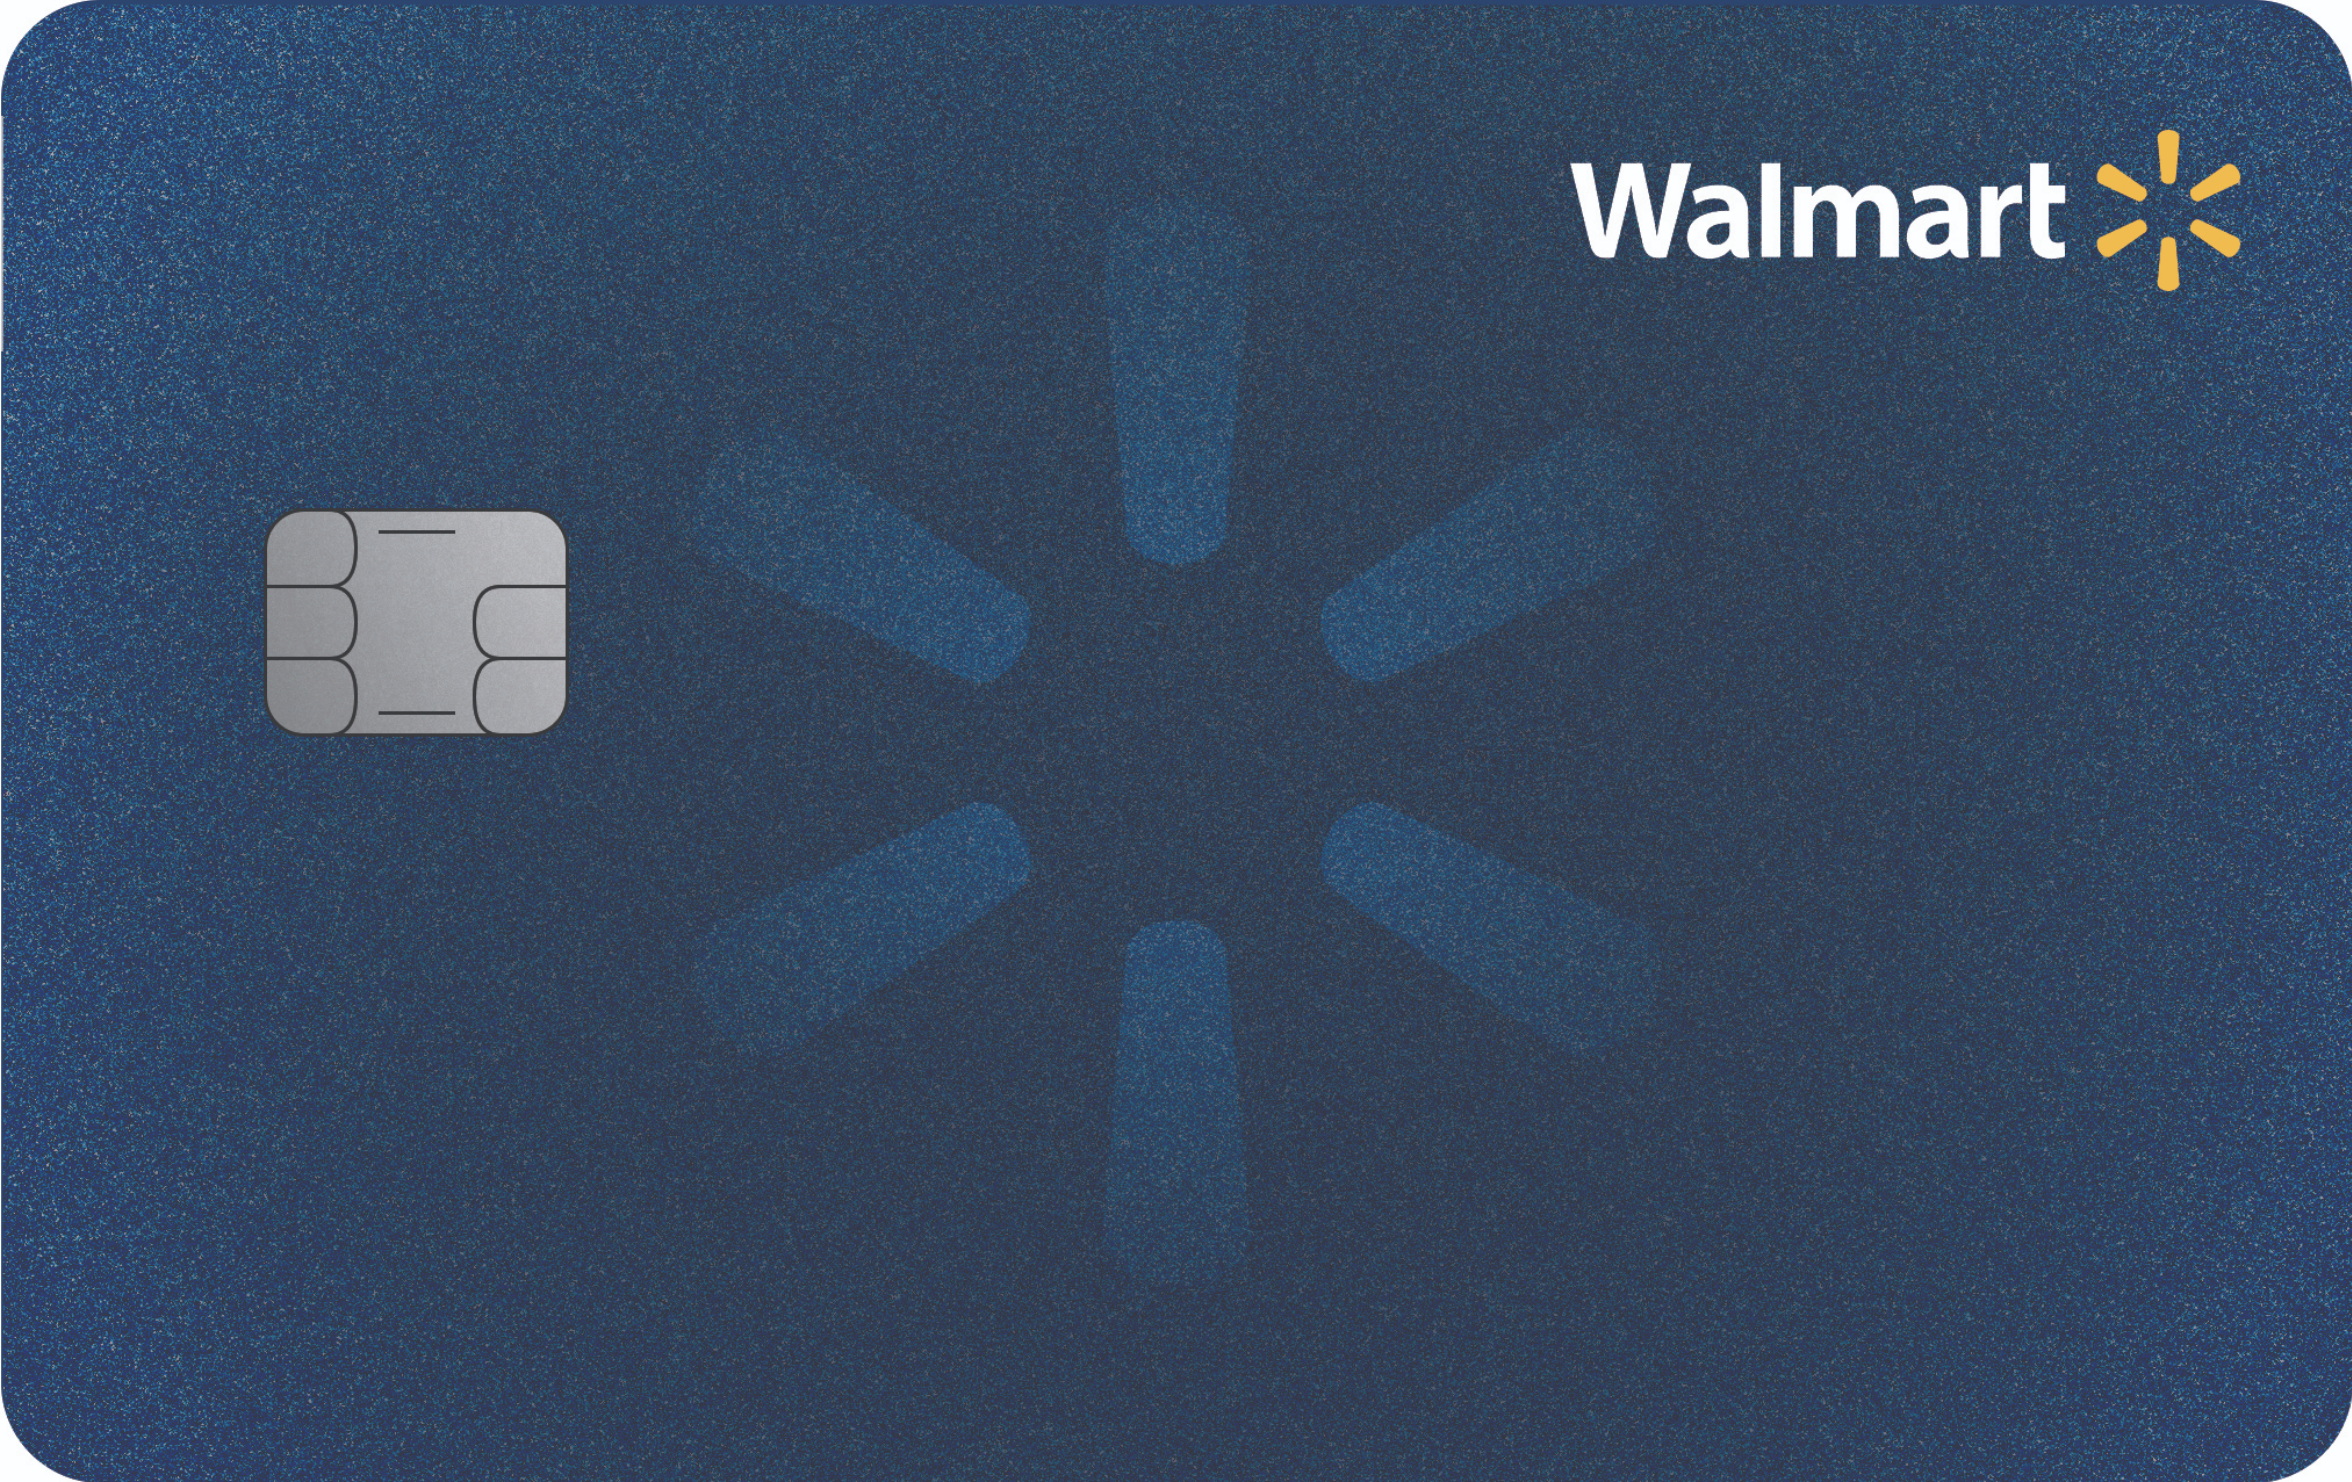 capital one walmart credit card application status